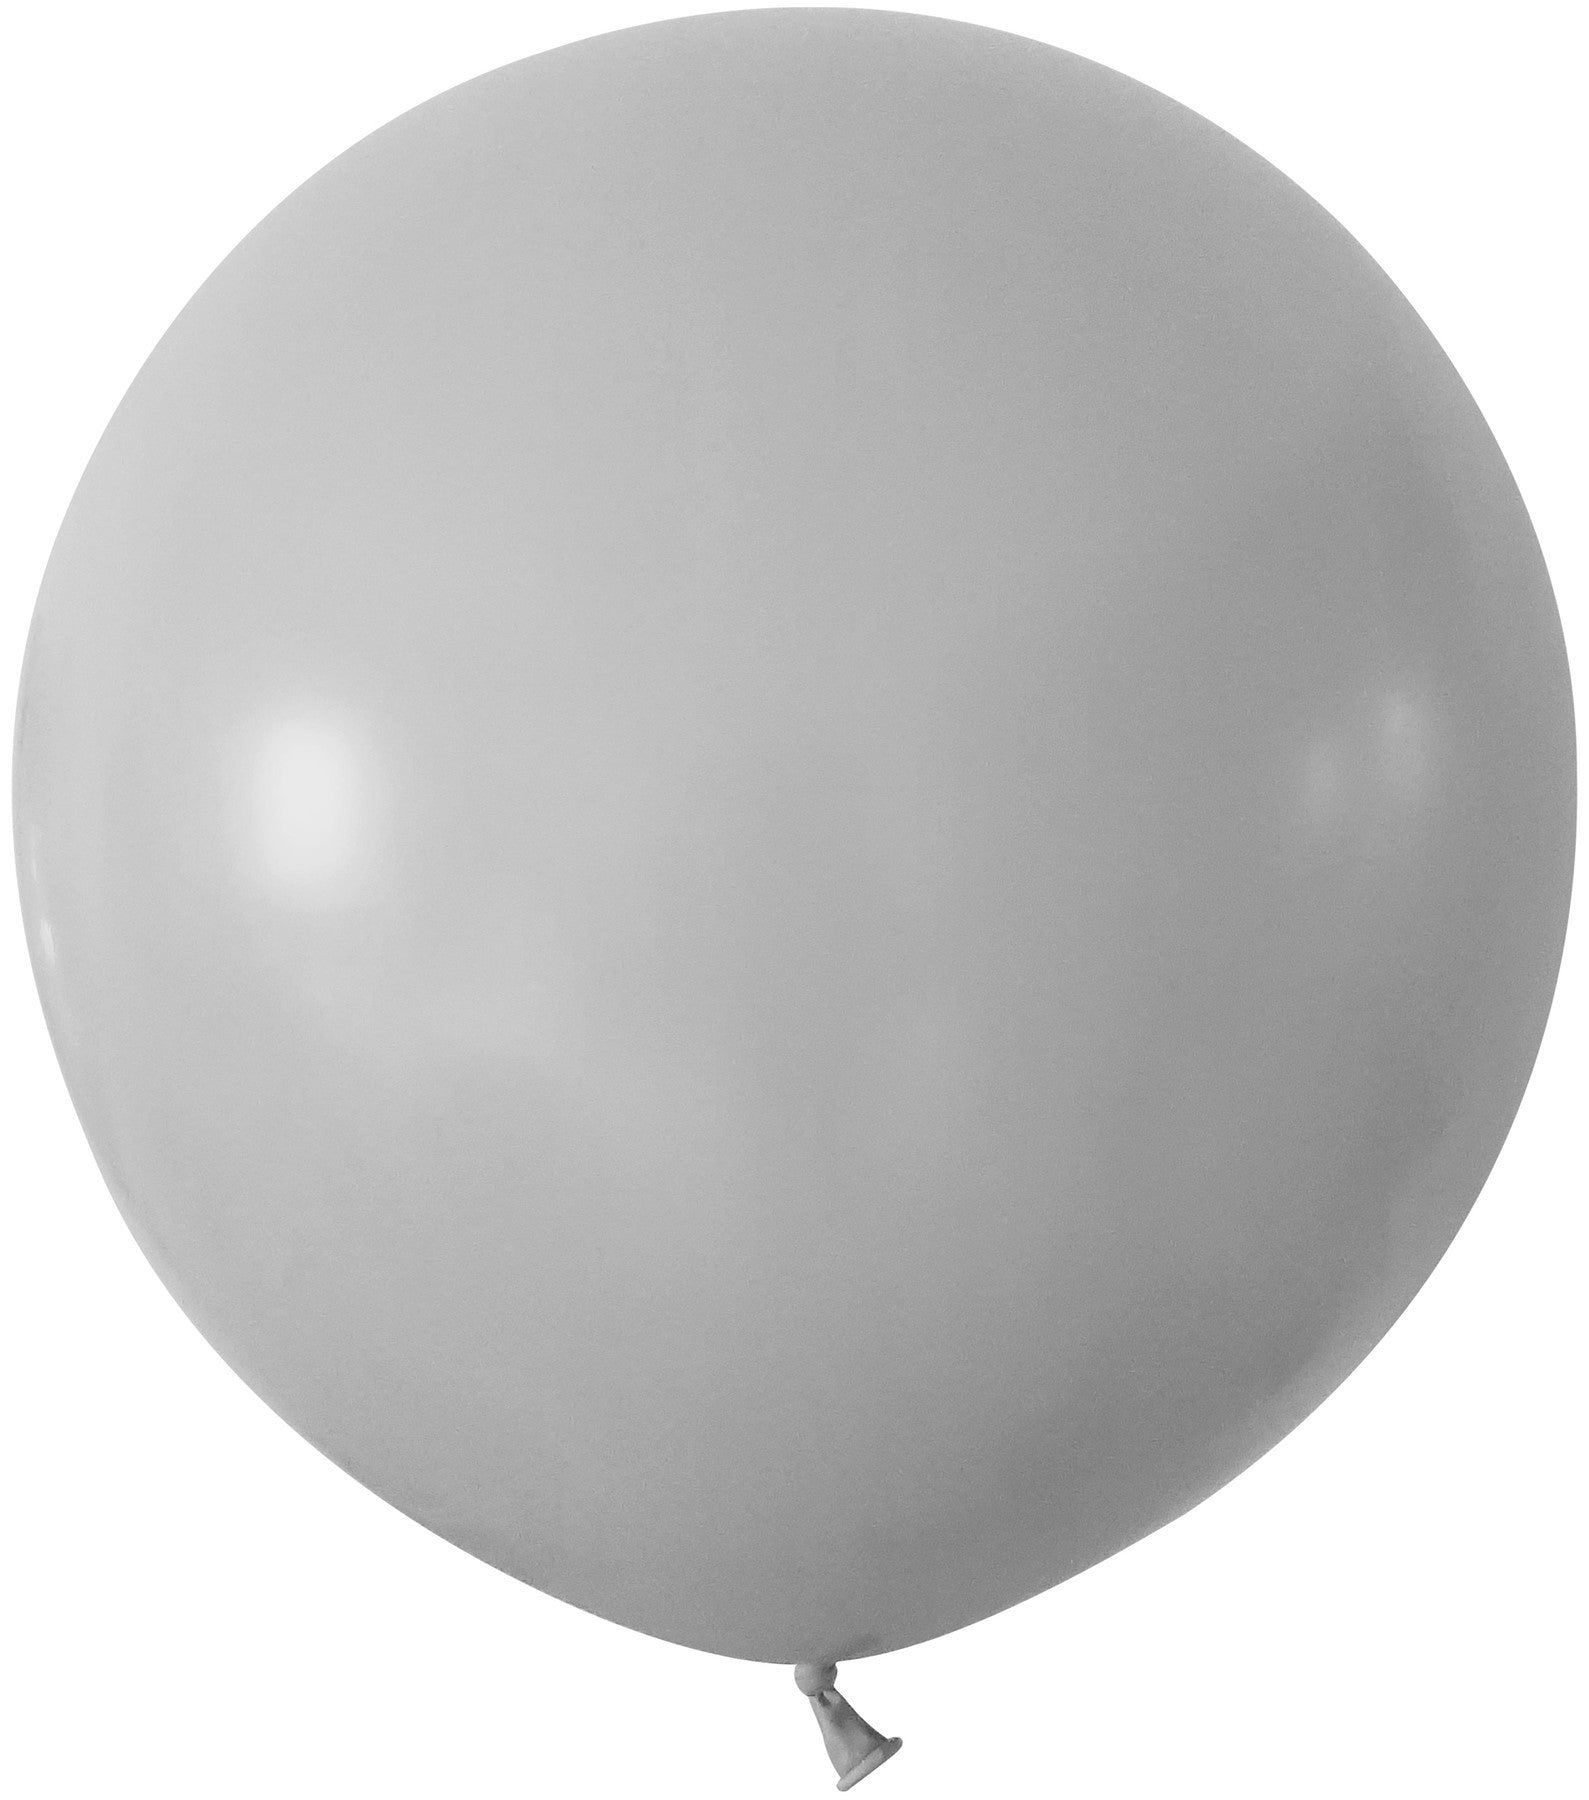 View Grey Jumbo Latex Balloon 24 inch Pk 3 information